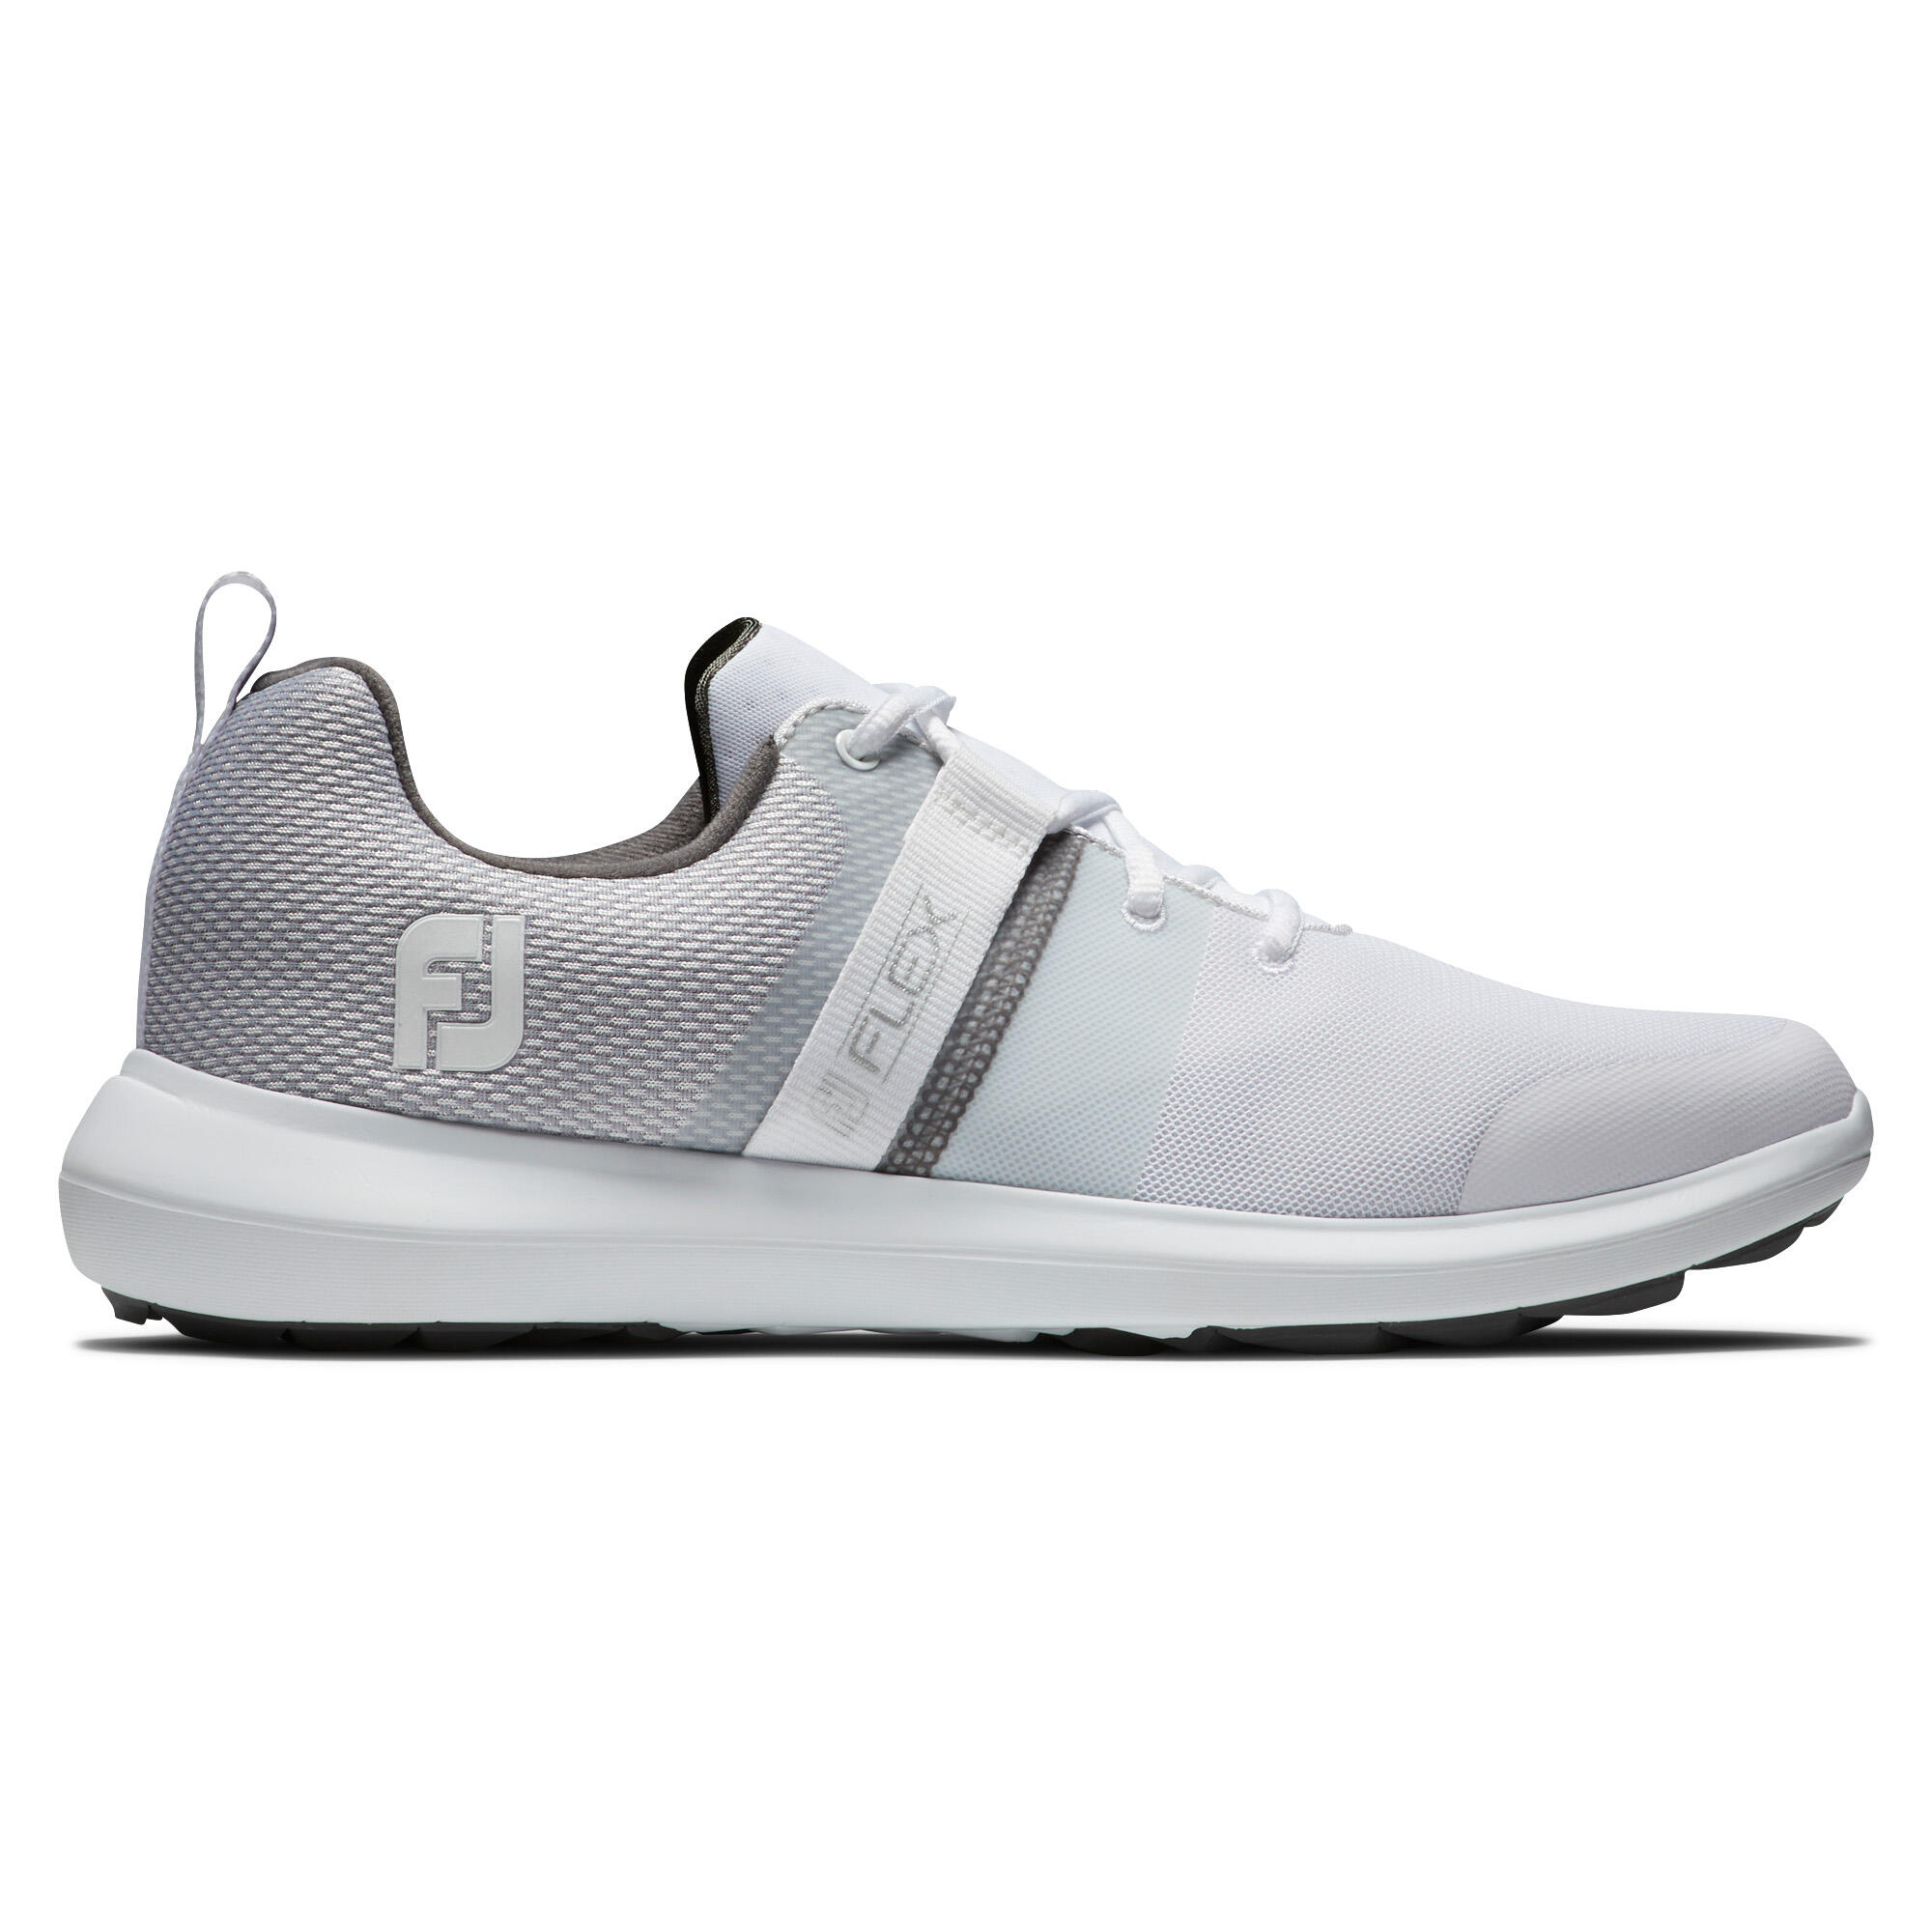 Men’s golf shoes FJ Flex - white and grey 2/6